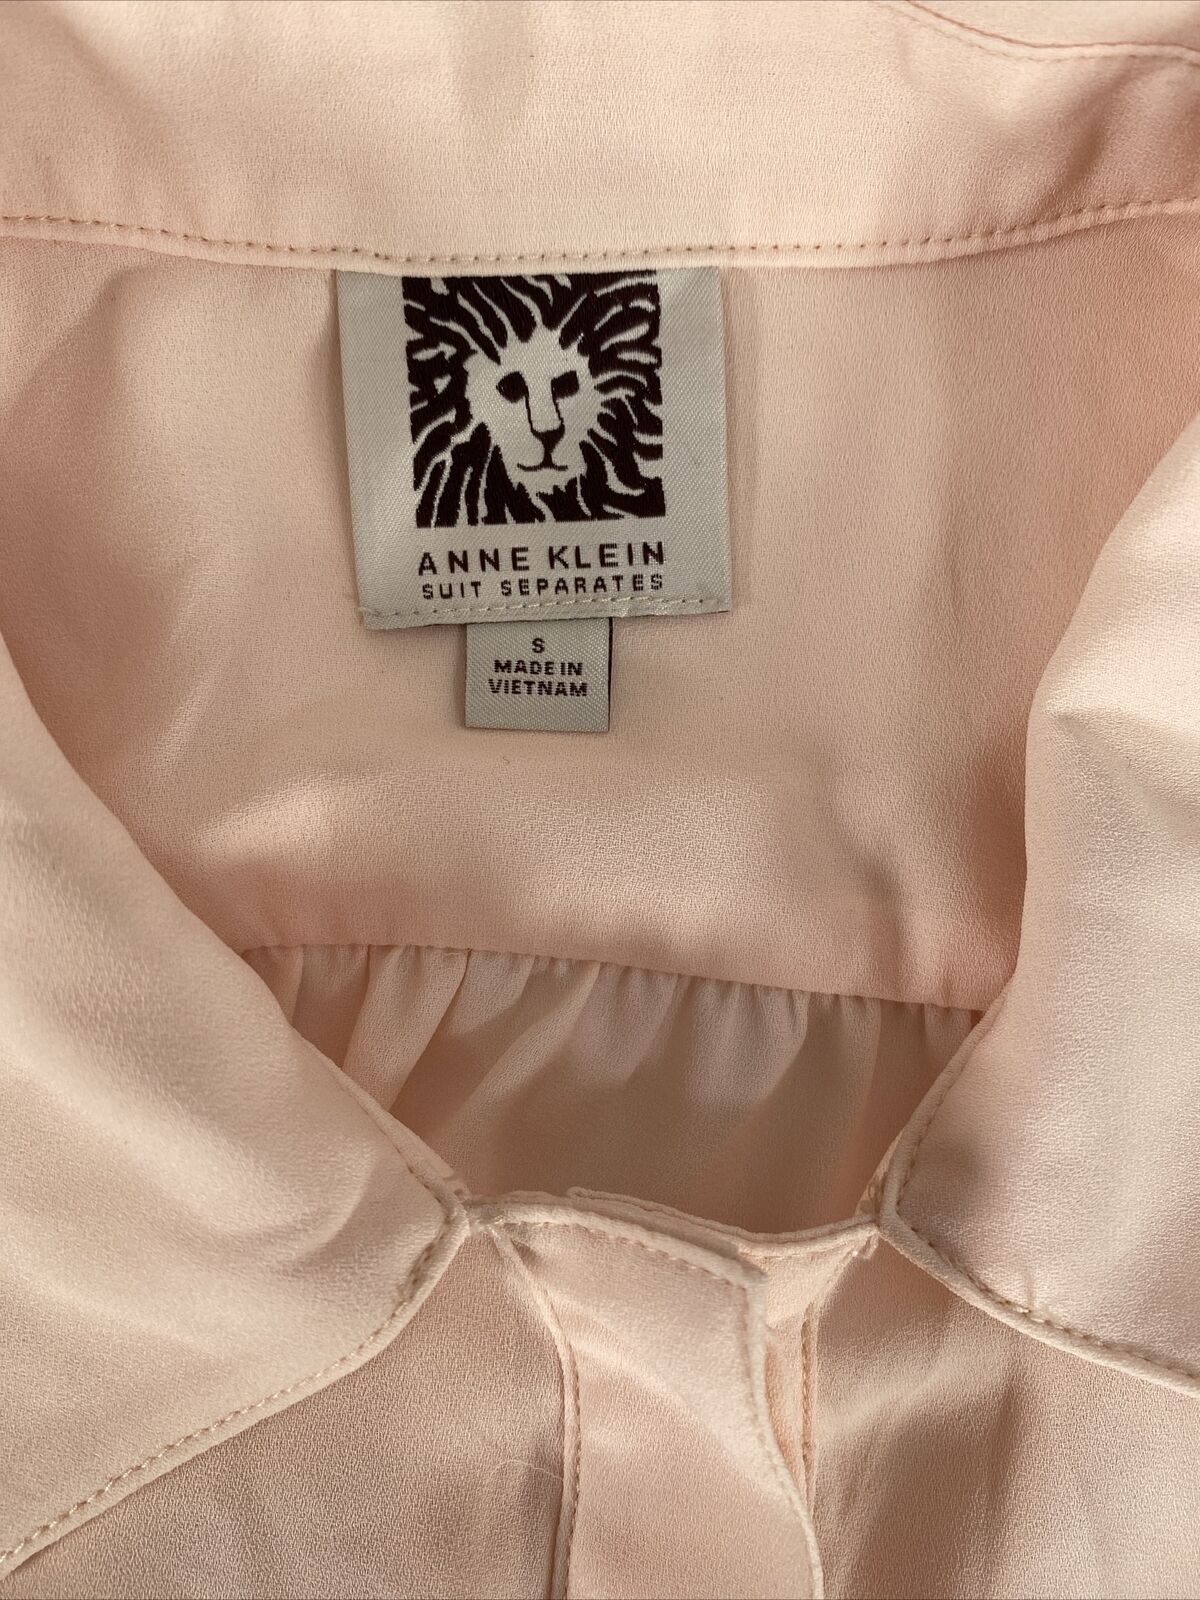 Anne Klein Blusa rosa transparente sin mangas con botones para mujer - S